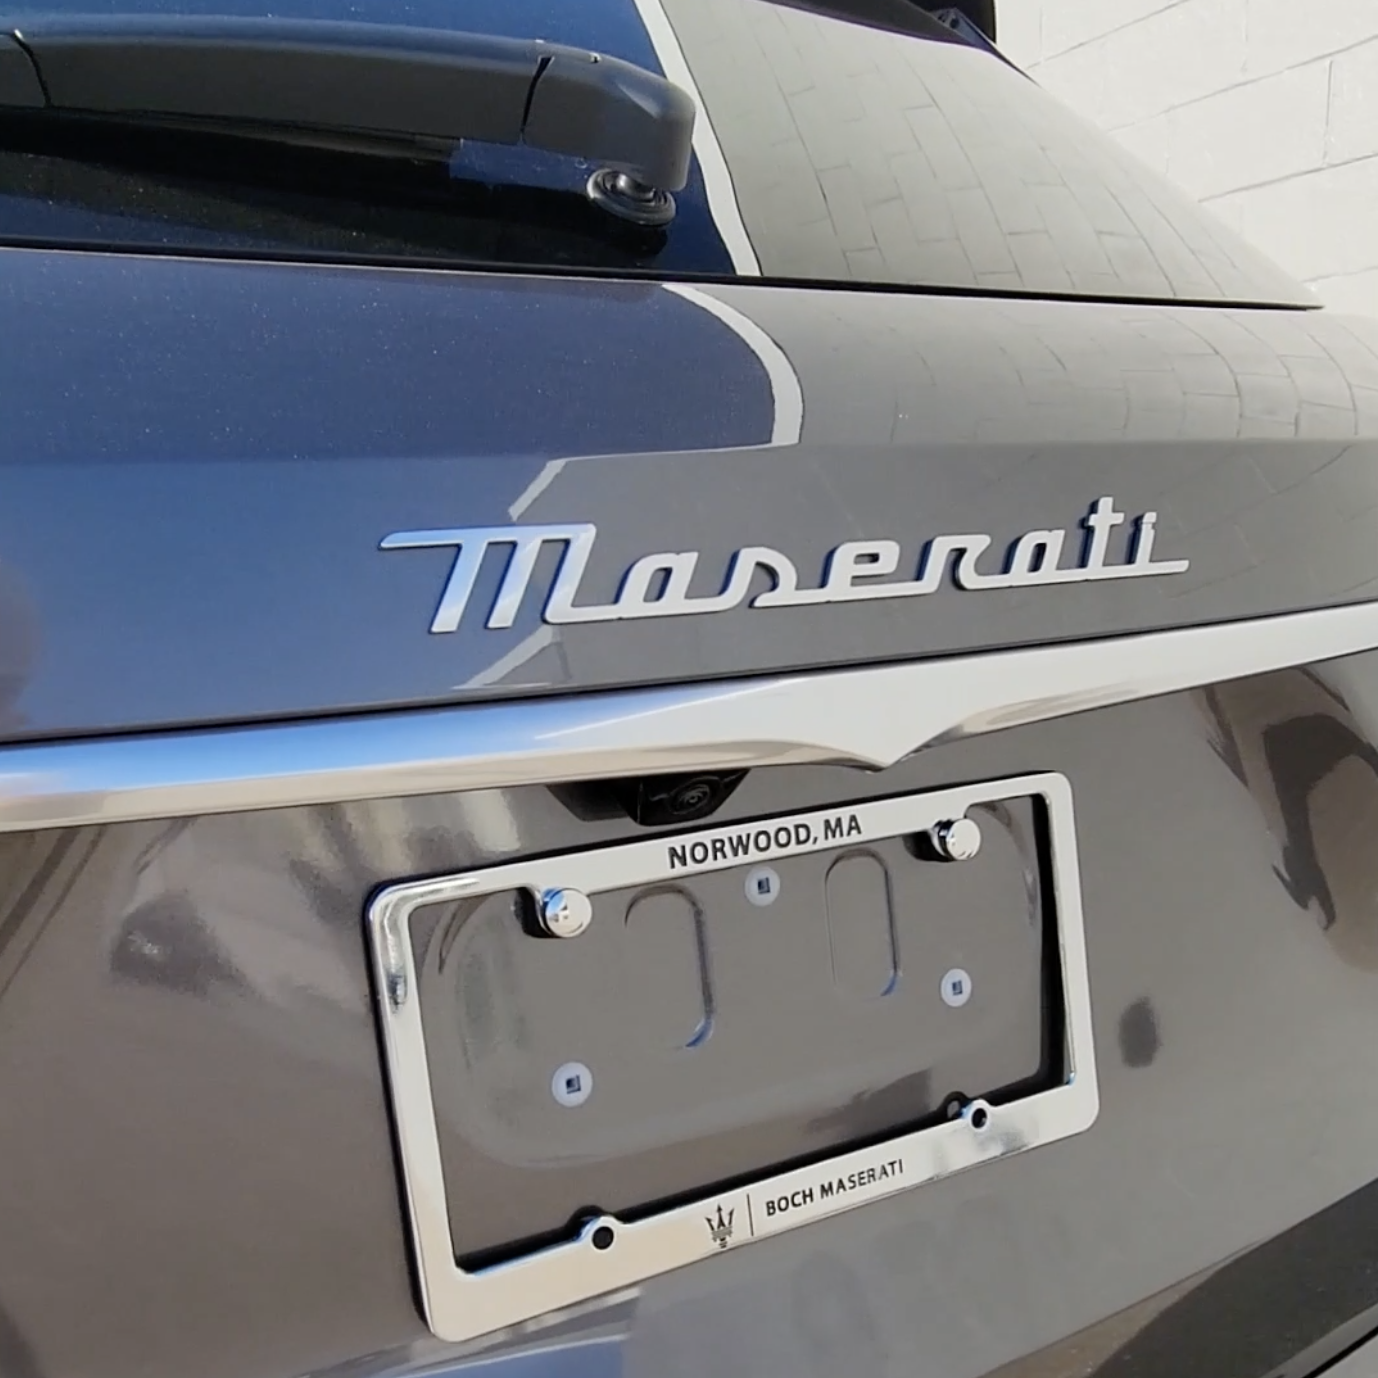 Boch Maserati License Plate Frame